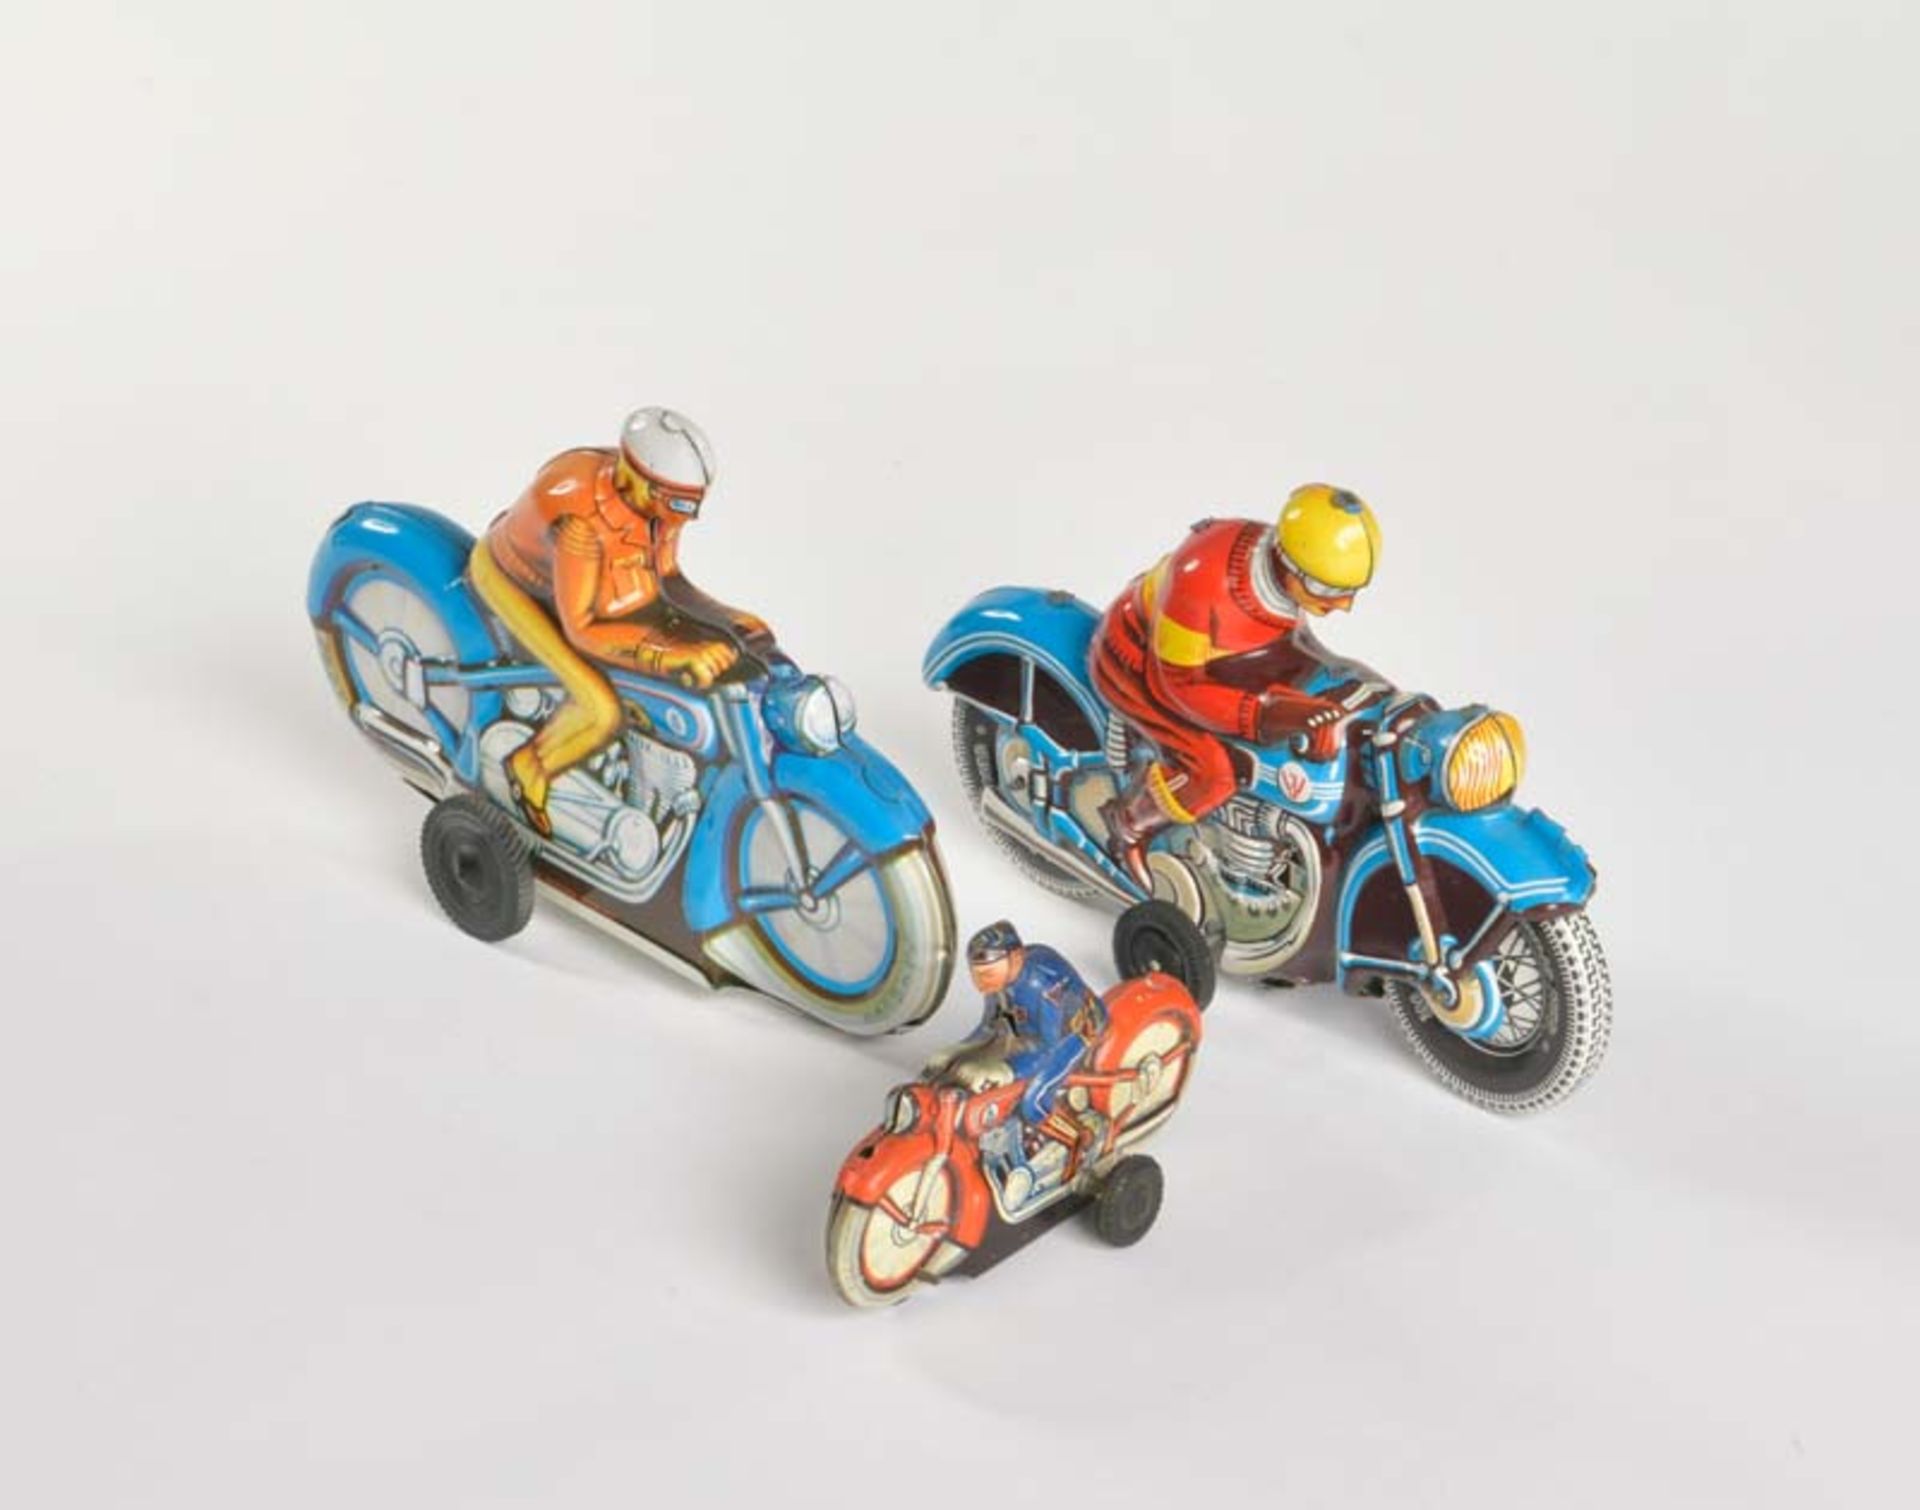 Niedermeier, 3 Motorräder, W.-Germany, 10-17 cm, Blech, Friktion ok, min. LM, Z 1-2